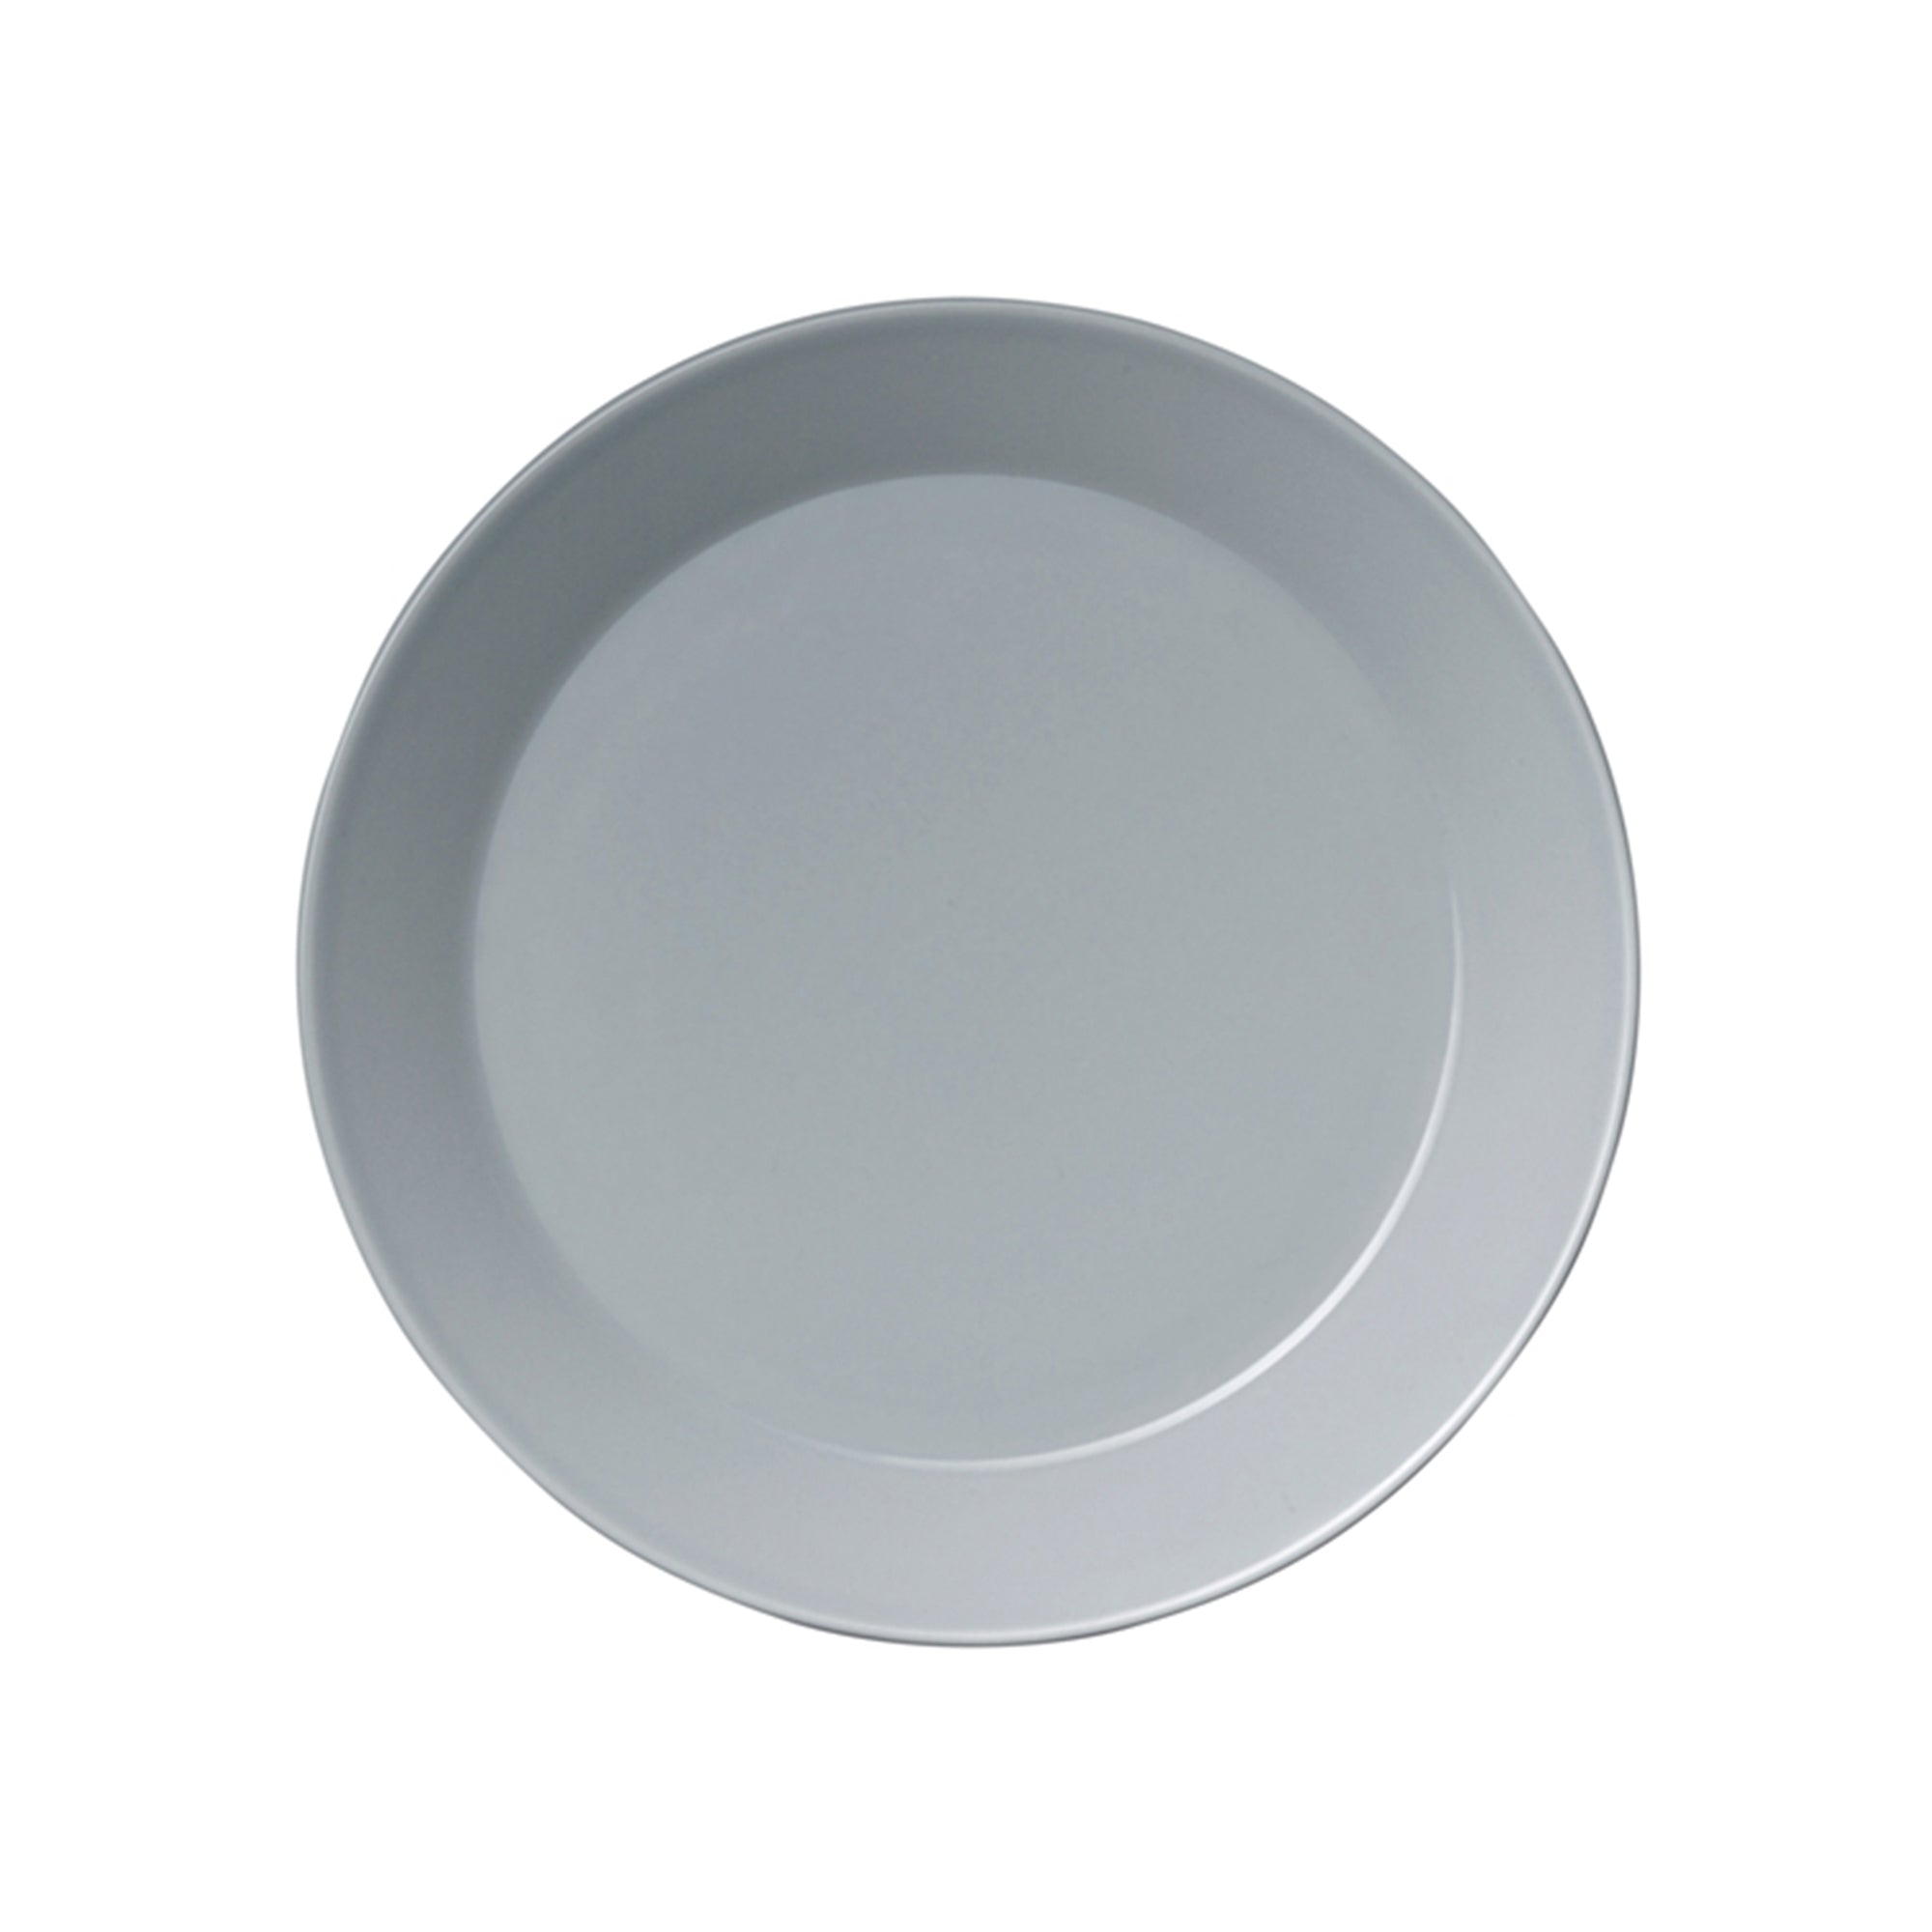 Teema Pearl Grey Dinner Plate, 10.25"